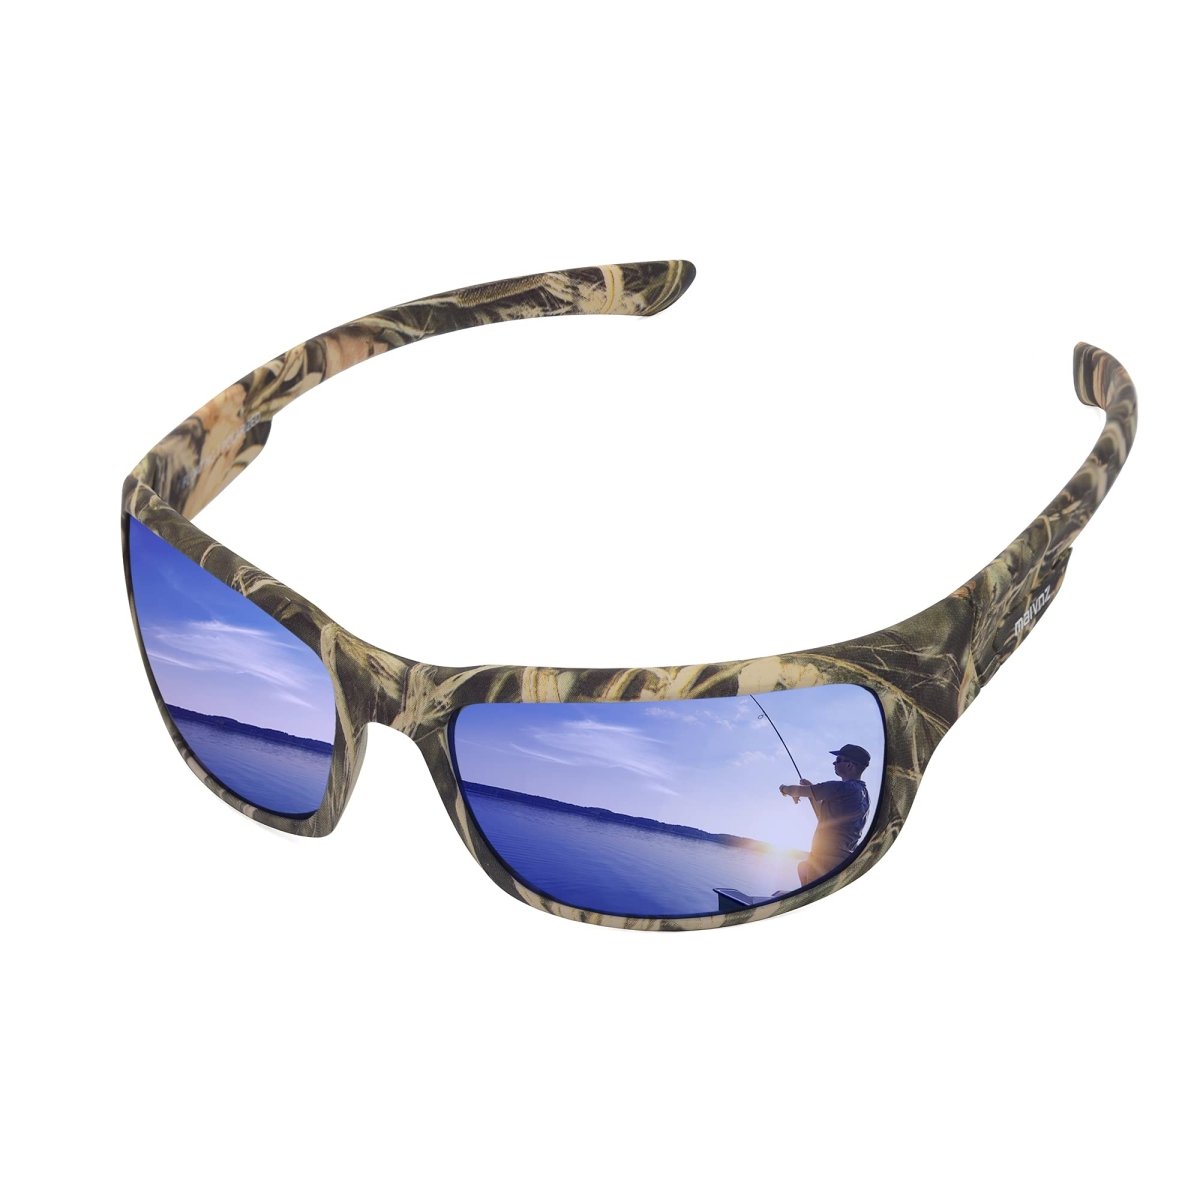  JIANGTUN Floating Polarized Fishing Sunglasses with